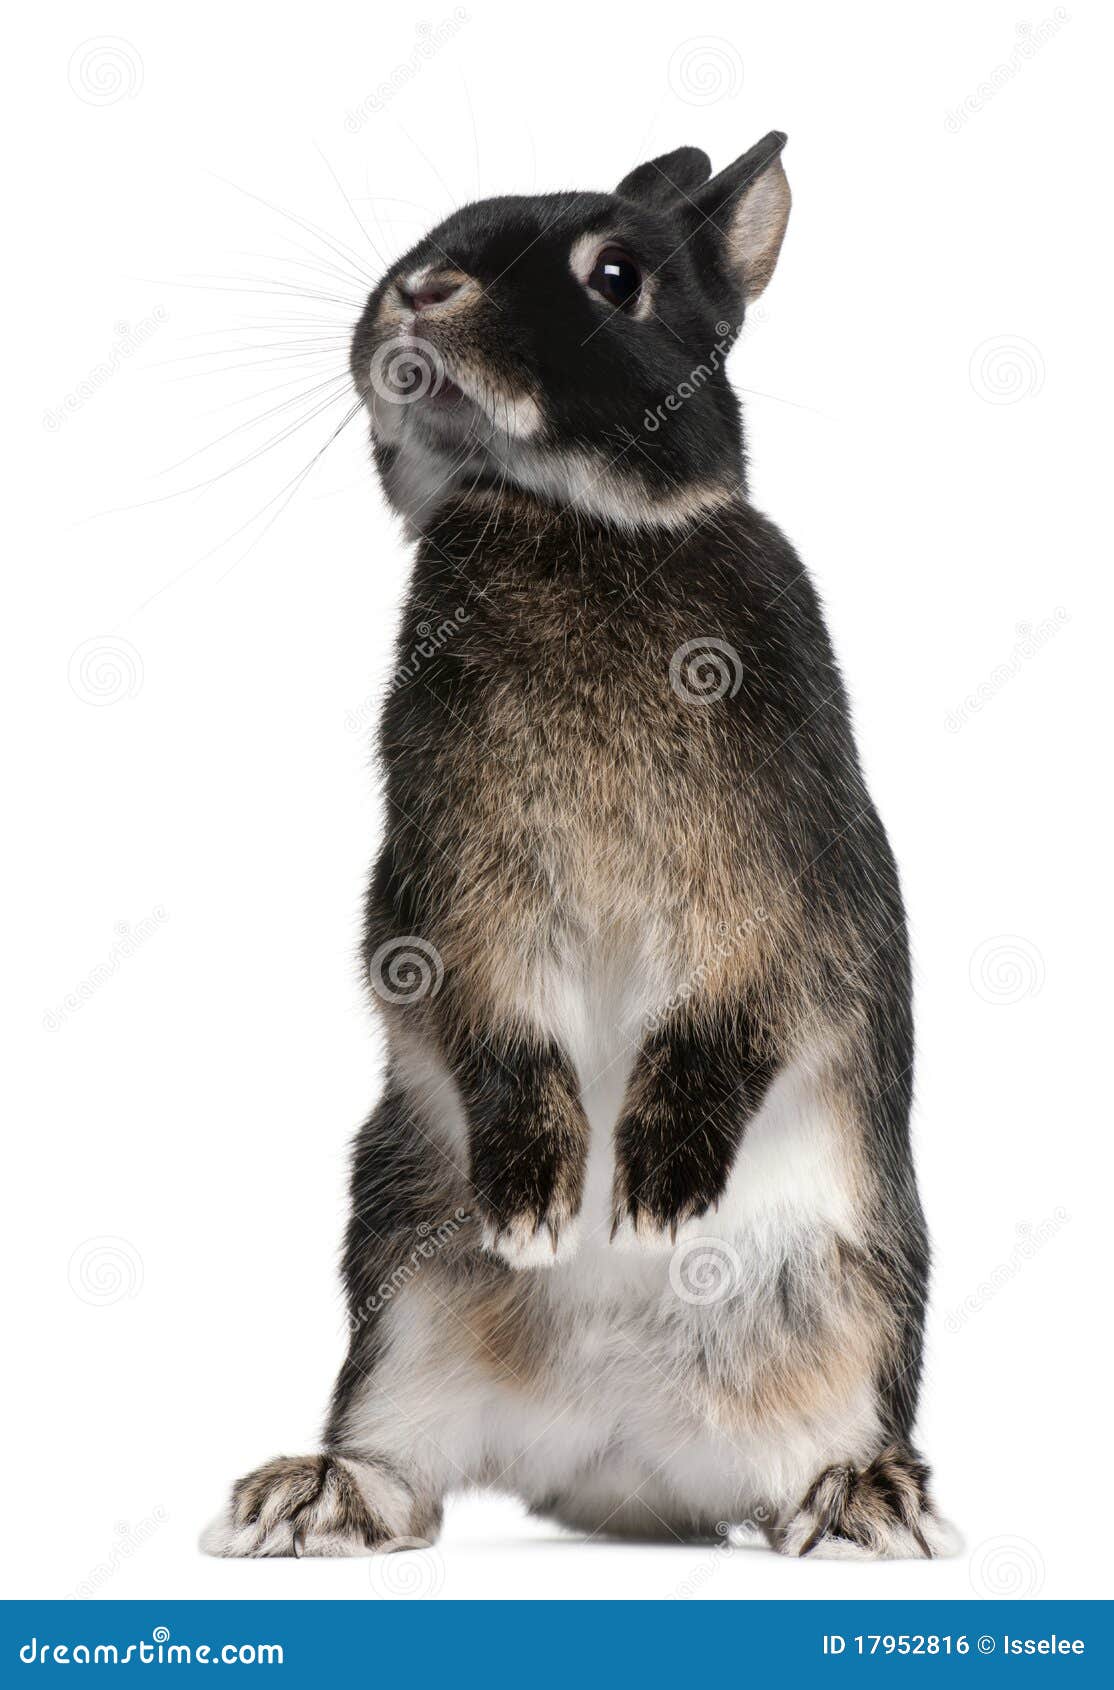 rabbit standing on hind legs